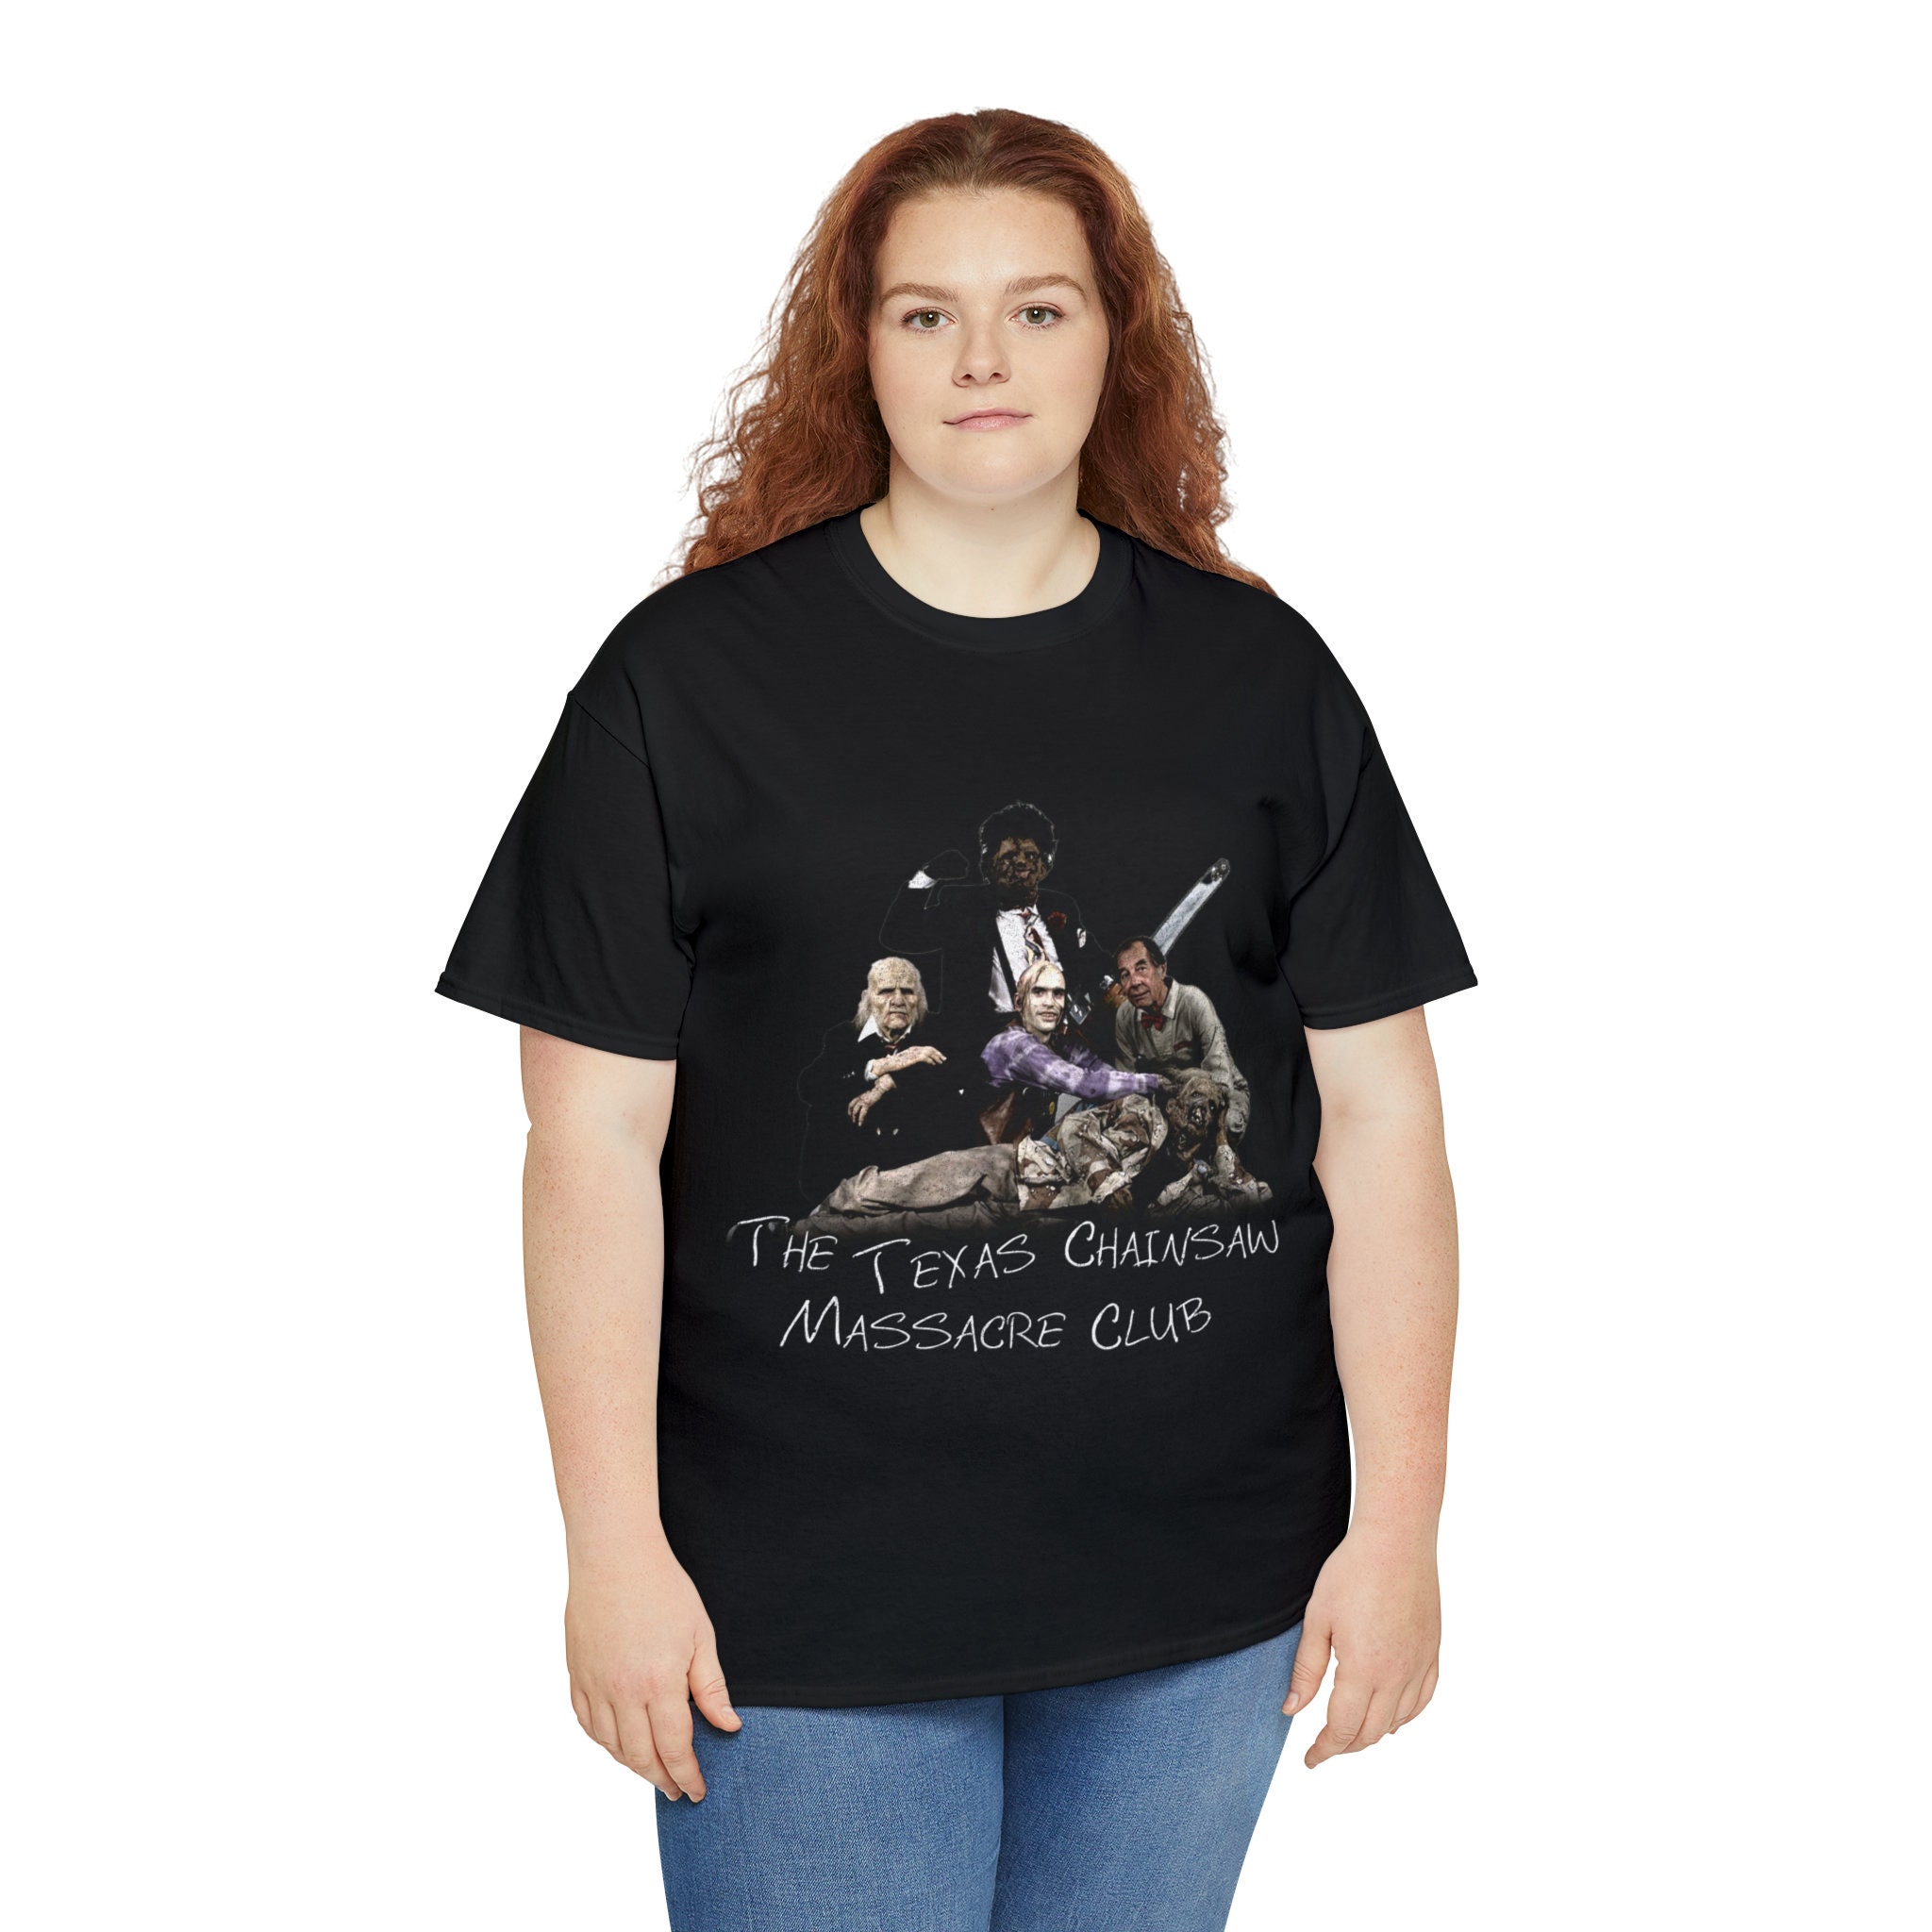 The Texas Chainsaw Massacre Club Indie Band Design Tee Shirt - Etsy